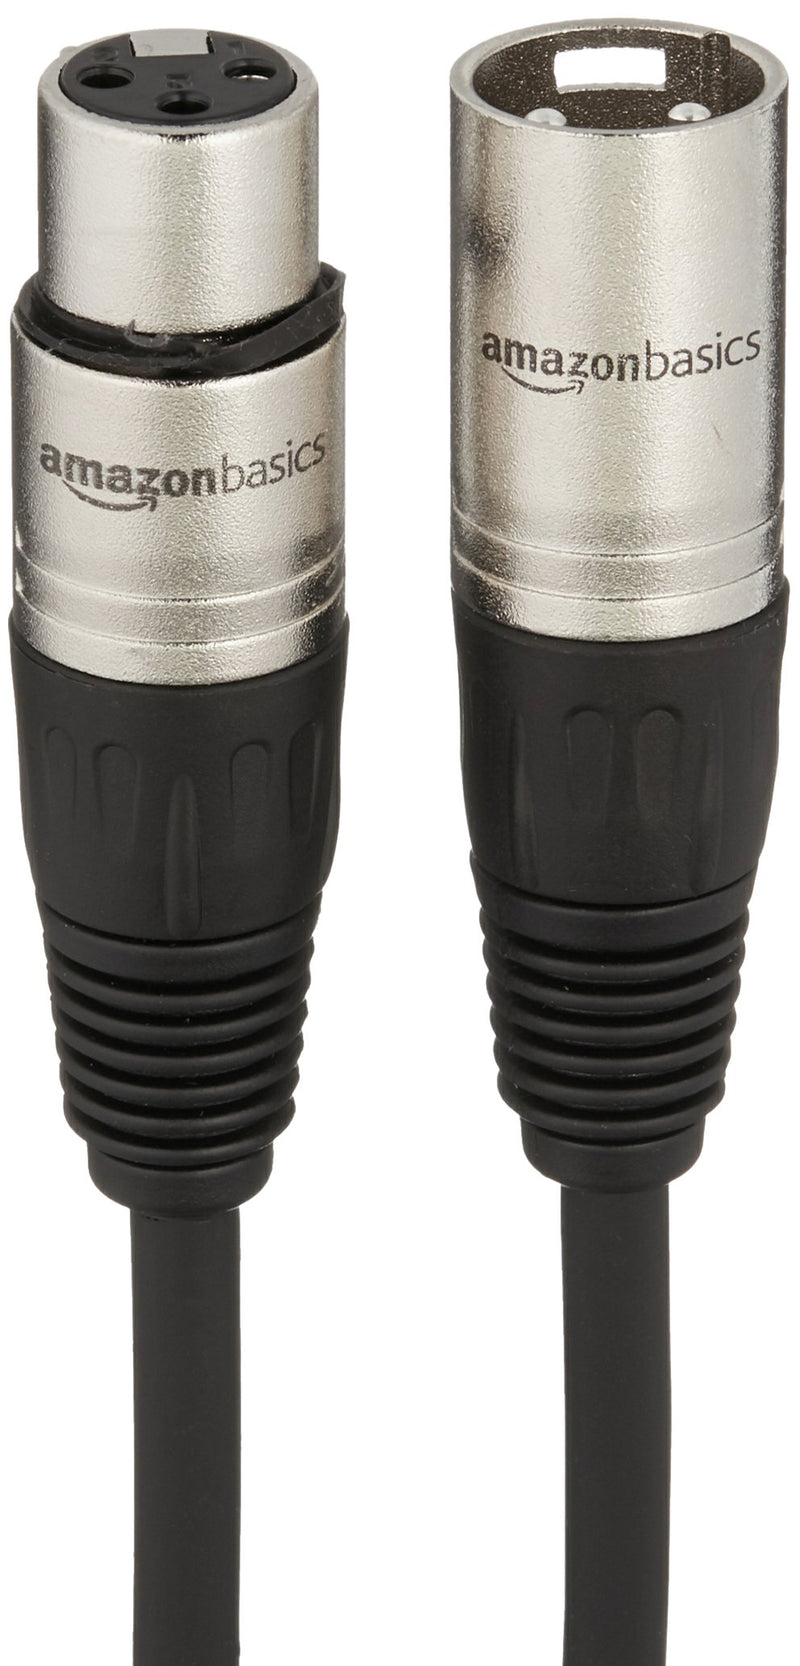 [AUSTRALIA] - AmazonBasics XLR Male to Female Microphone Cable - 6 Feet, Black 1-Pack 